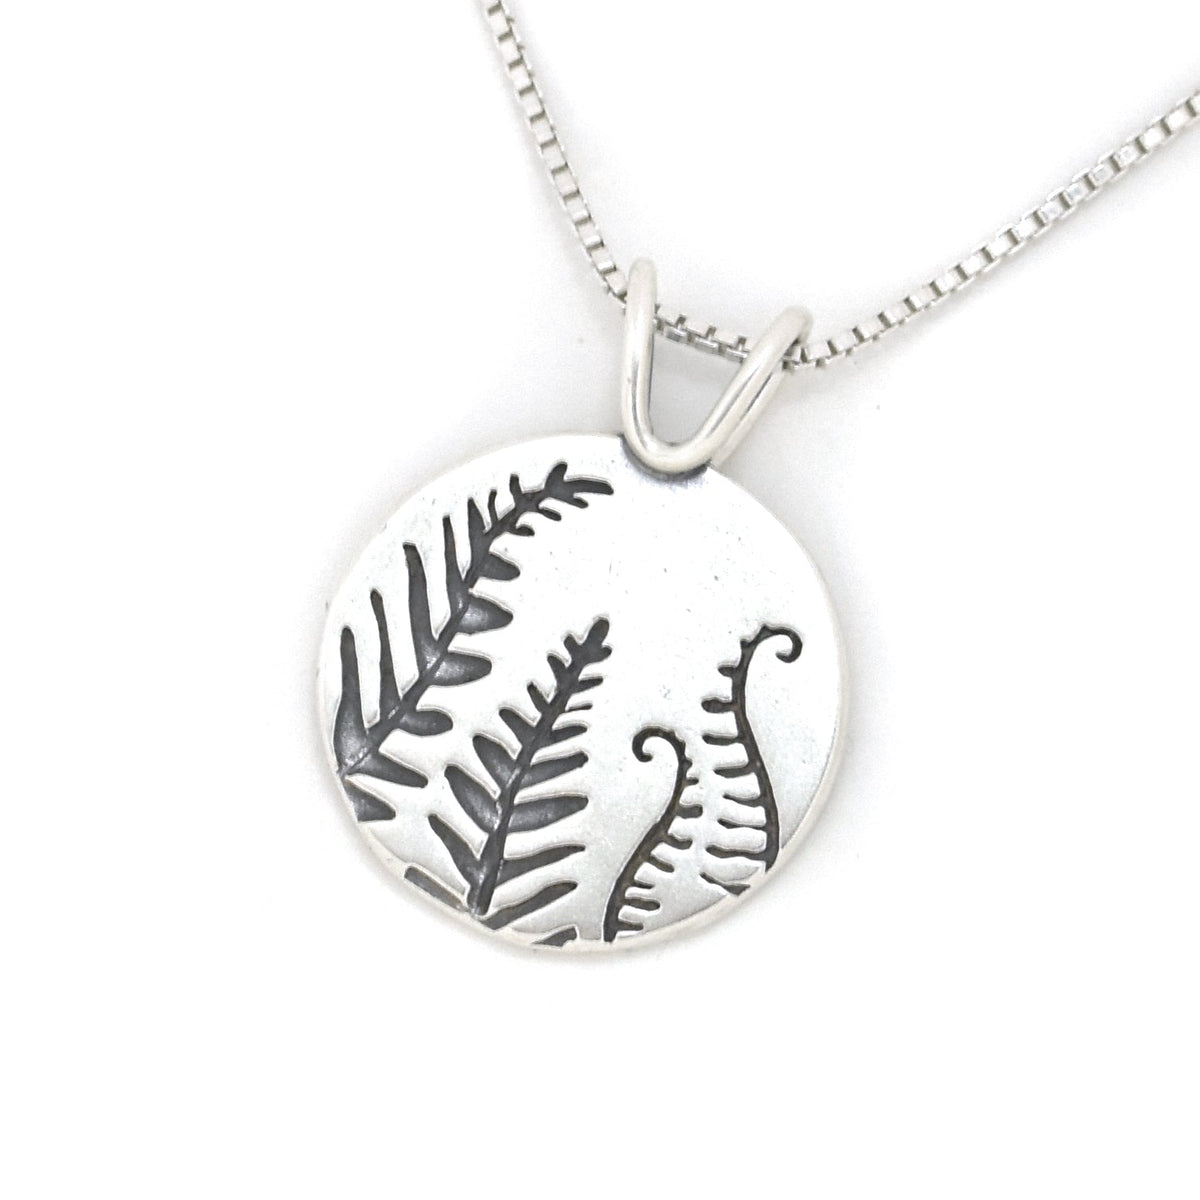 Fern Family Pendant - Silver Pendant   6986 - handmade by Beth Millner Jewelry